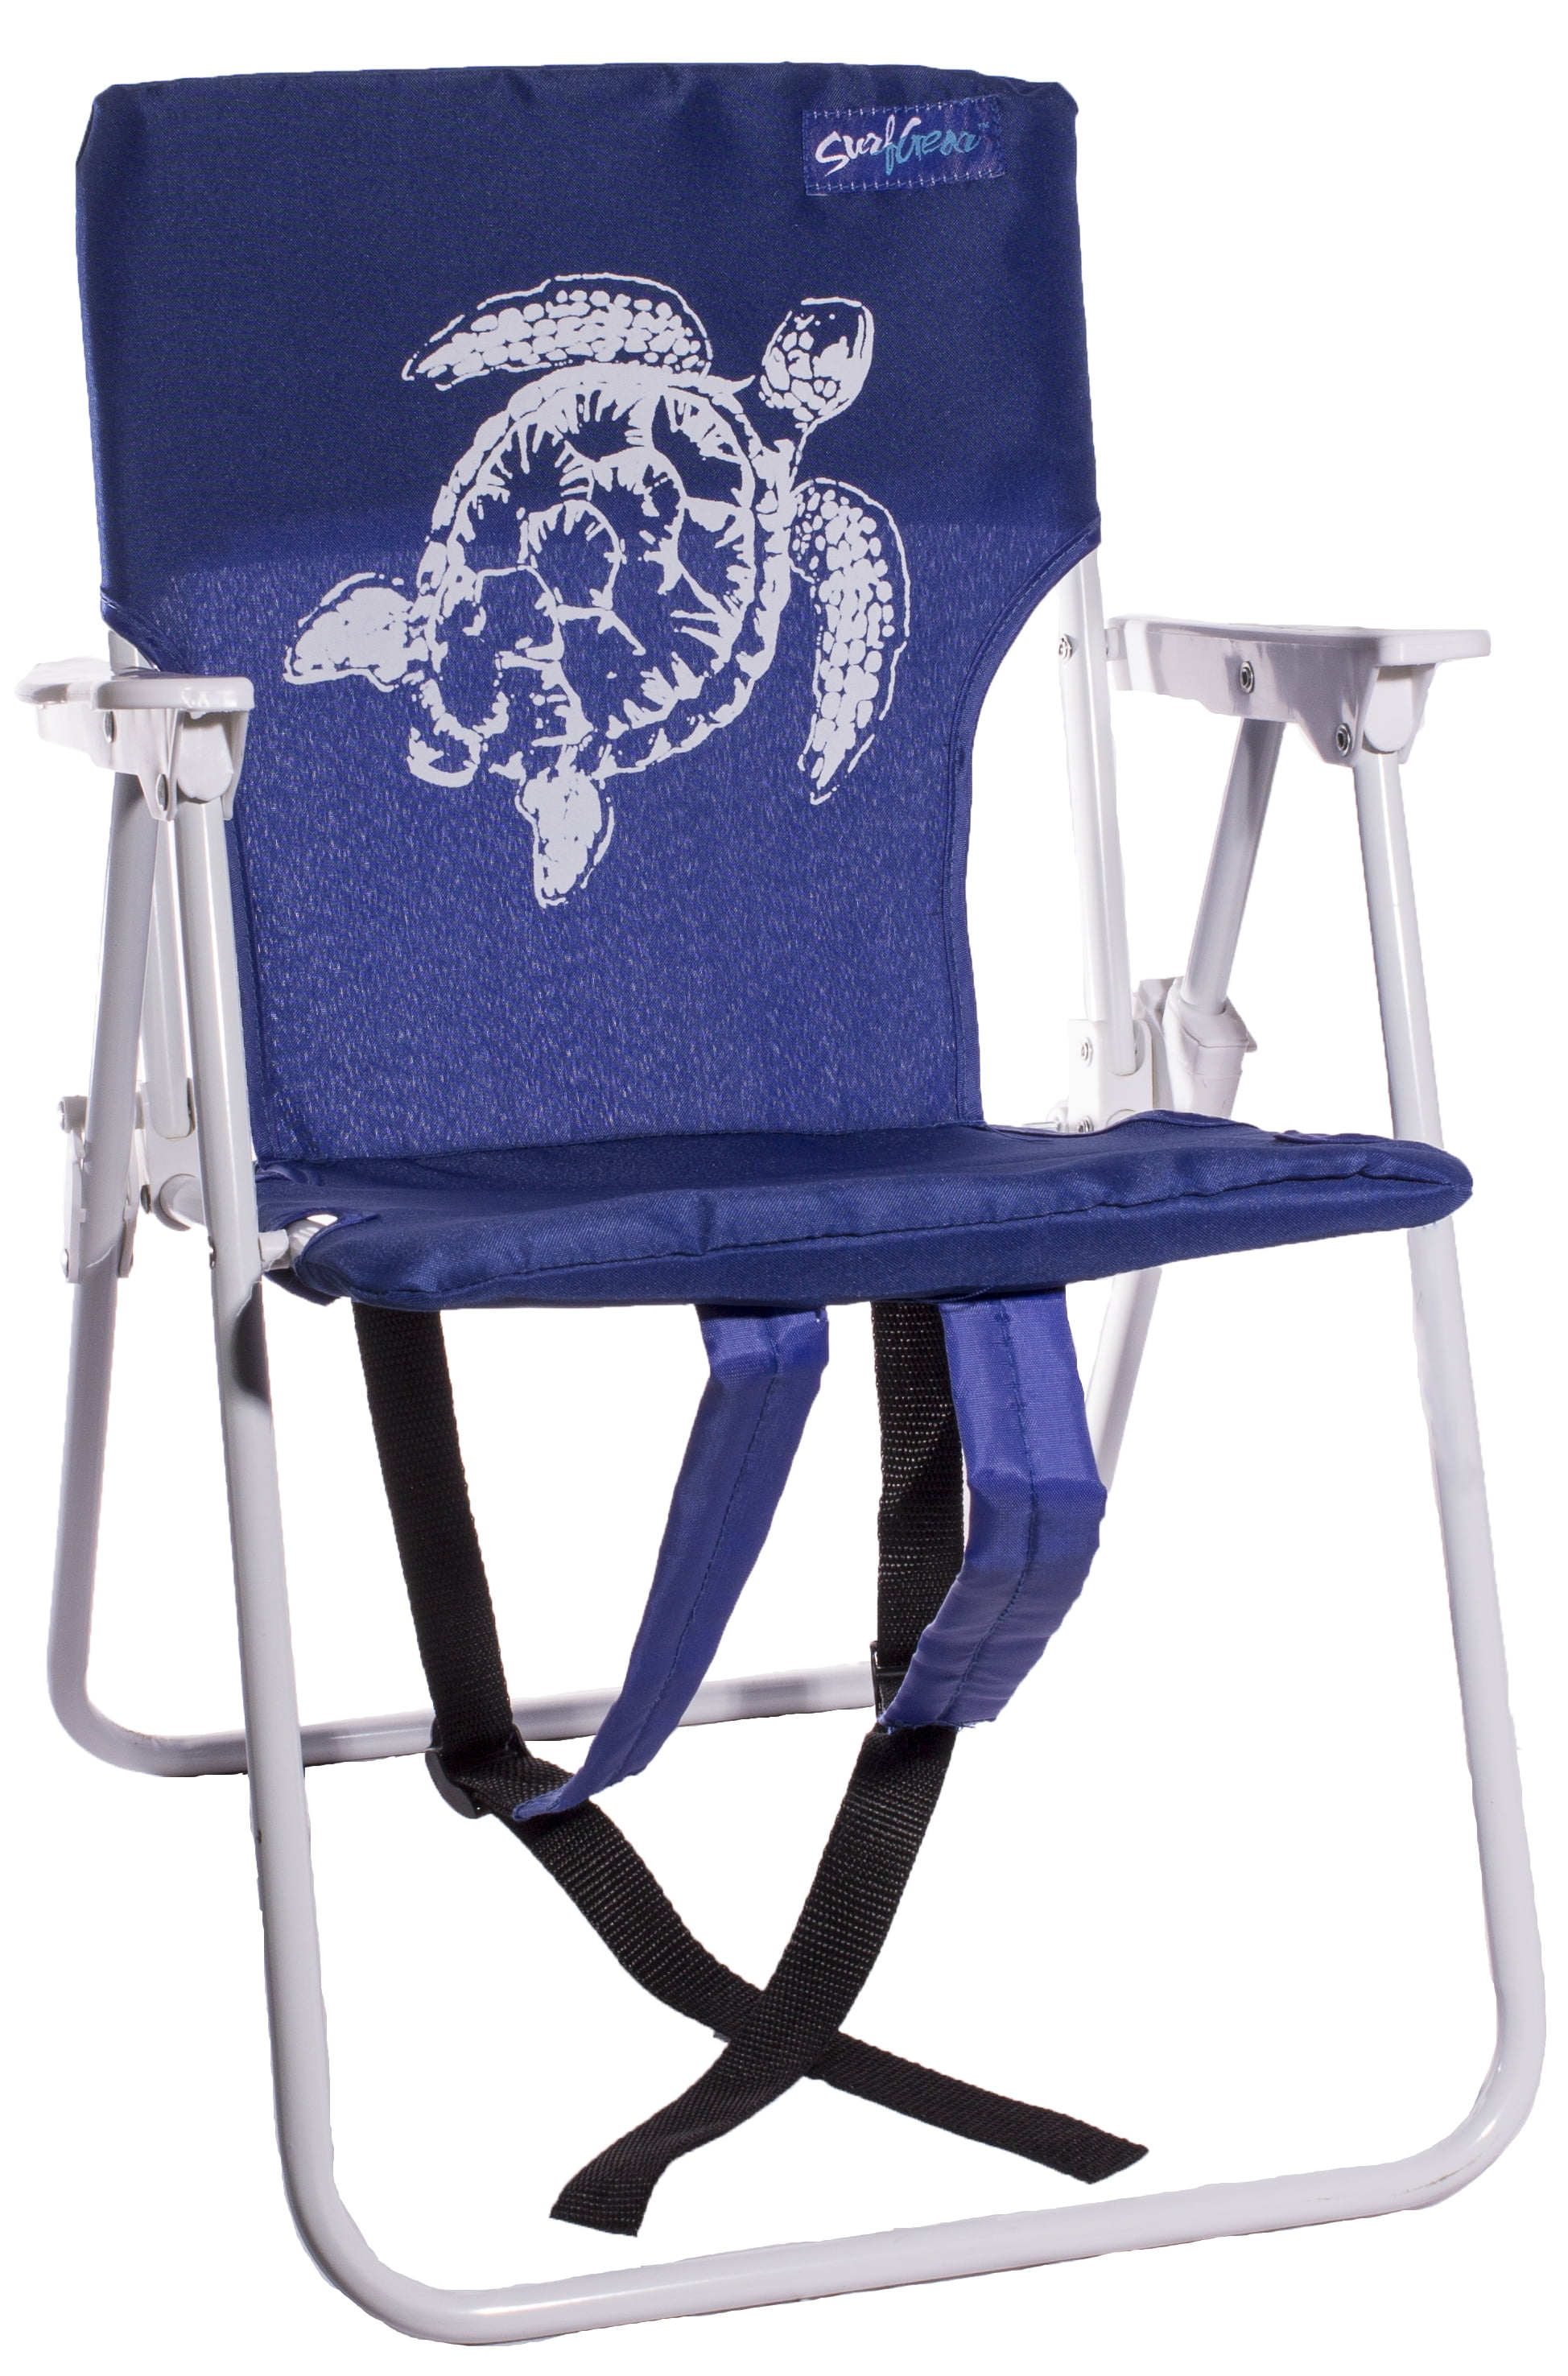 walmart kids beach chair